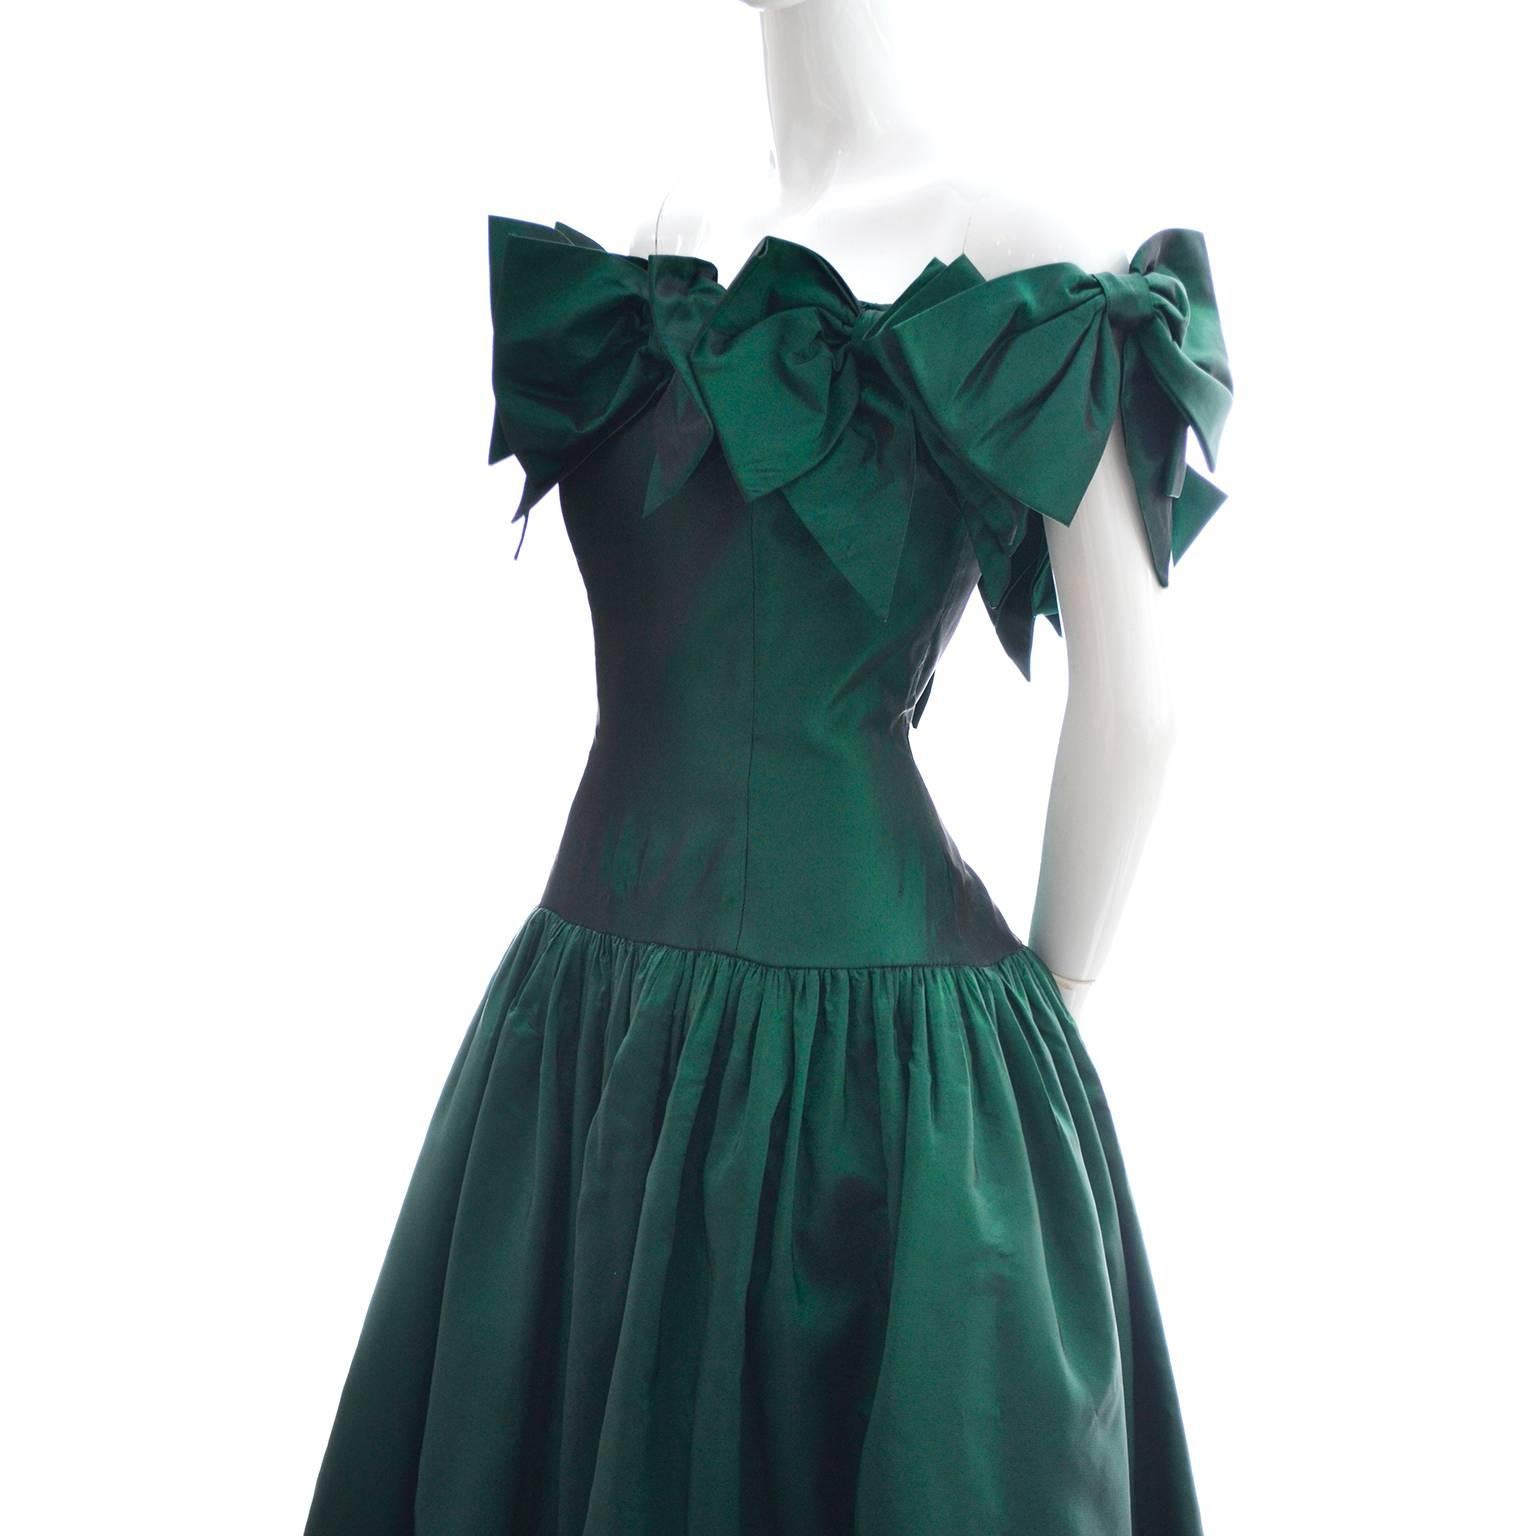 Black Victor Costa 1980s Vintage Dress Iridescent Green Ballgown Evening Gown 6/8